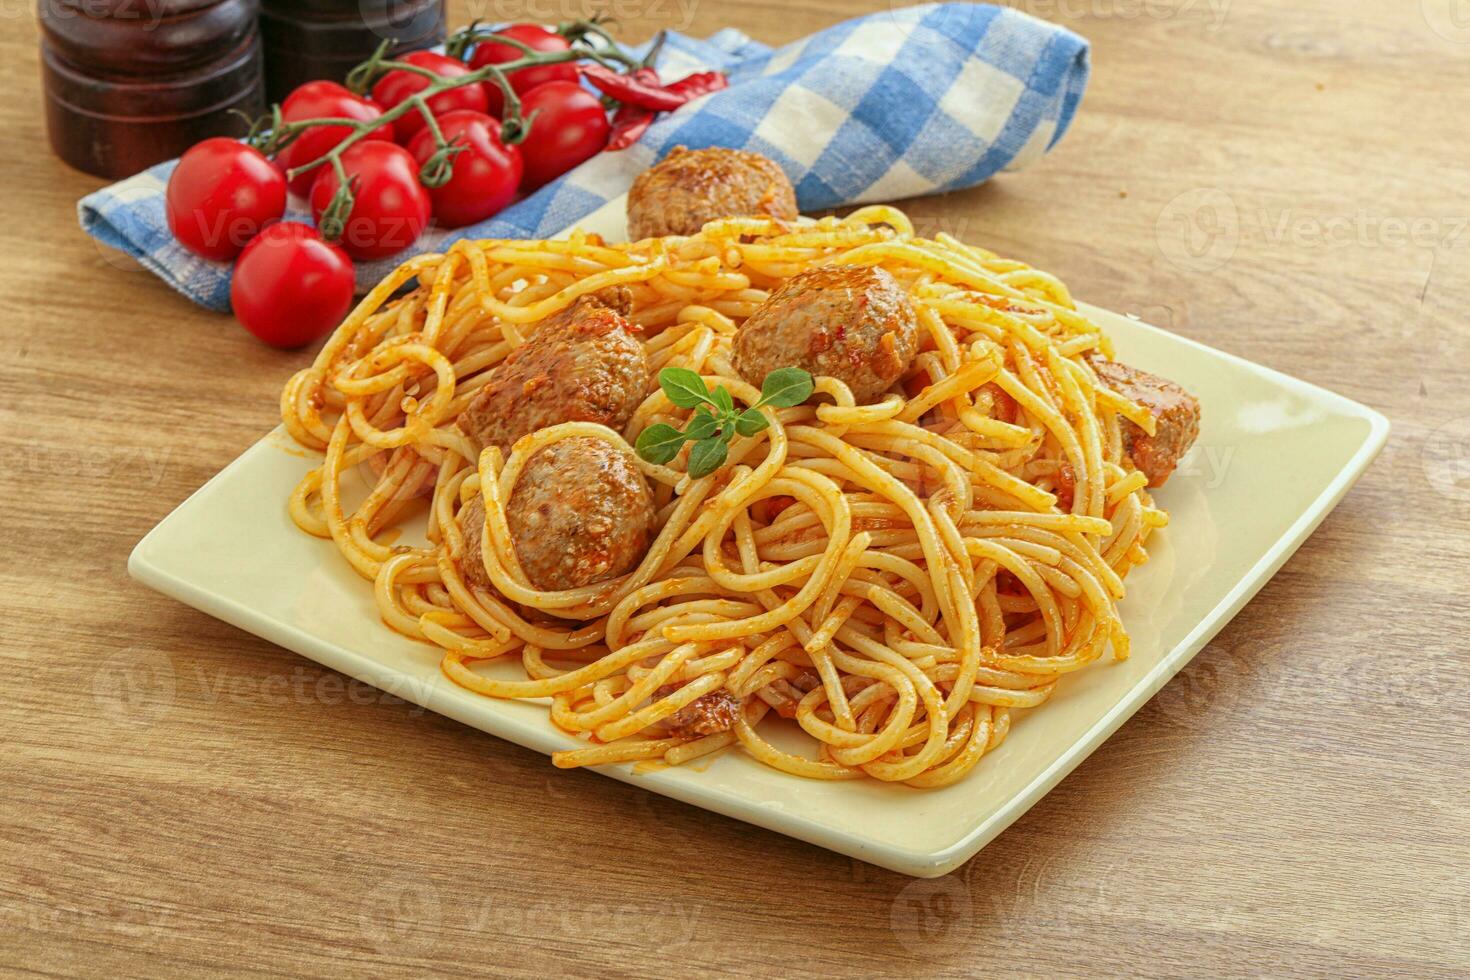 Spaghetti mit Hackbällchen in Tomatensoße foto